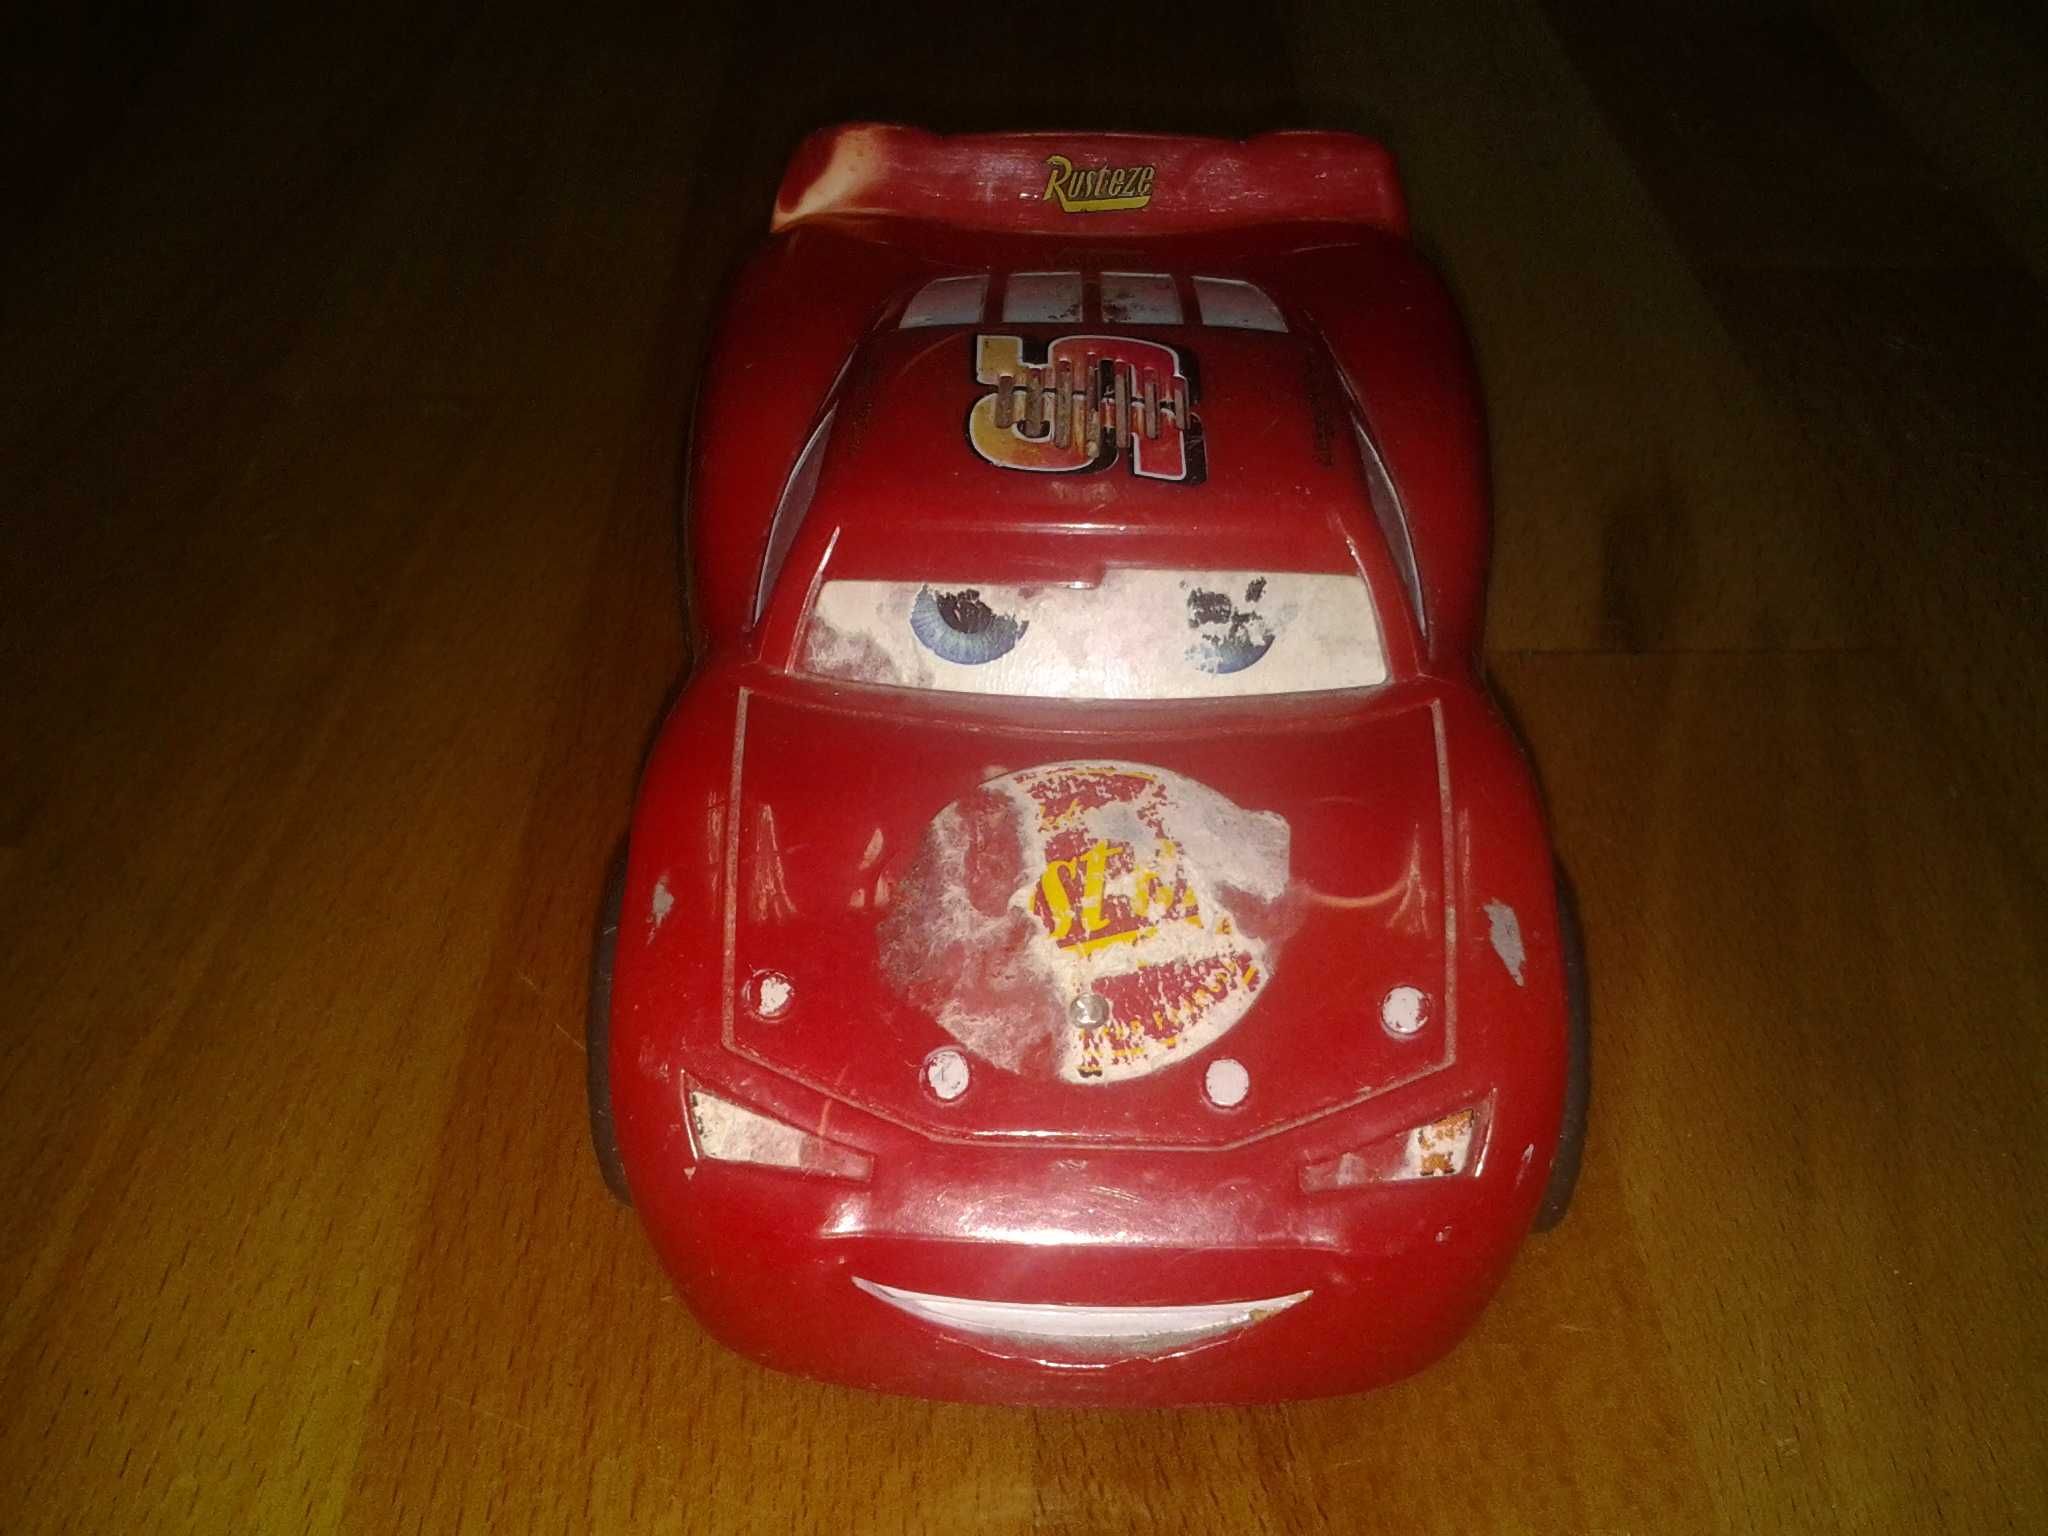 Lightning Mcqueen Disney Cars by Mattel masinuta copii